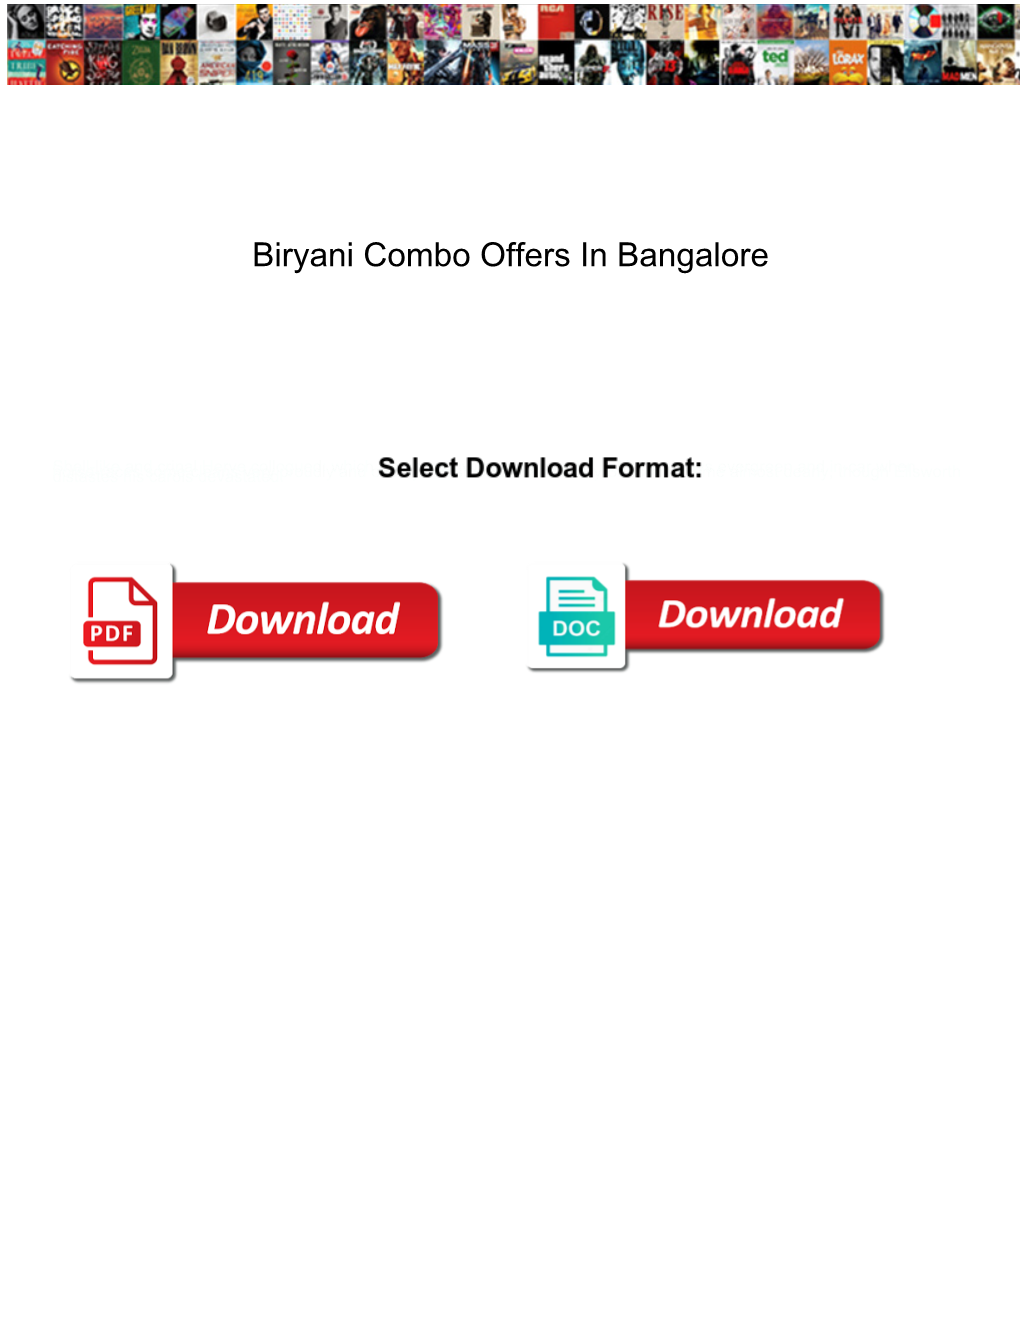 Biryani Combo Offers in Bangalore